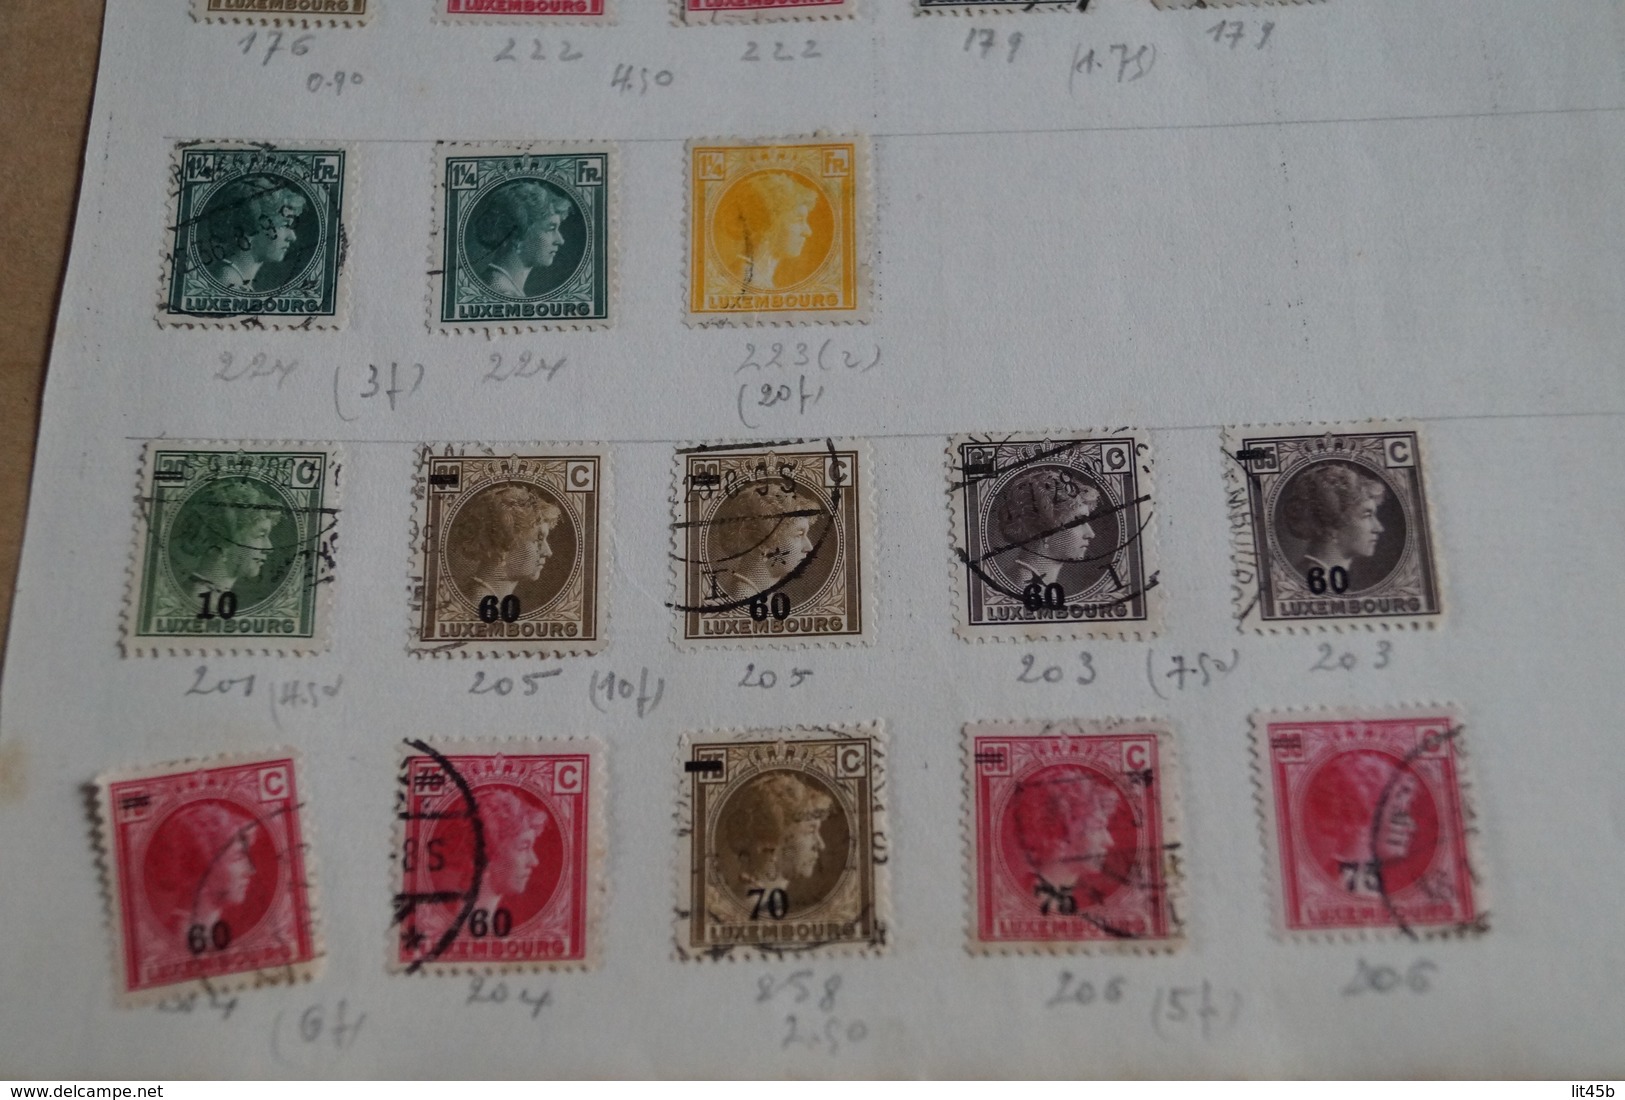 Collection Luxembourg ,très belles séries de 95 timbres anciens,collector